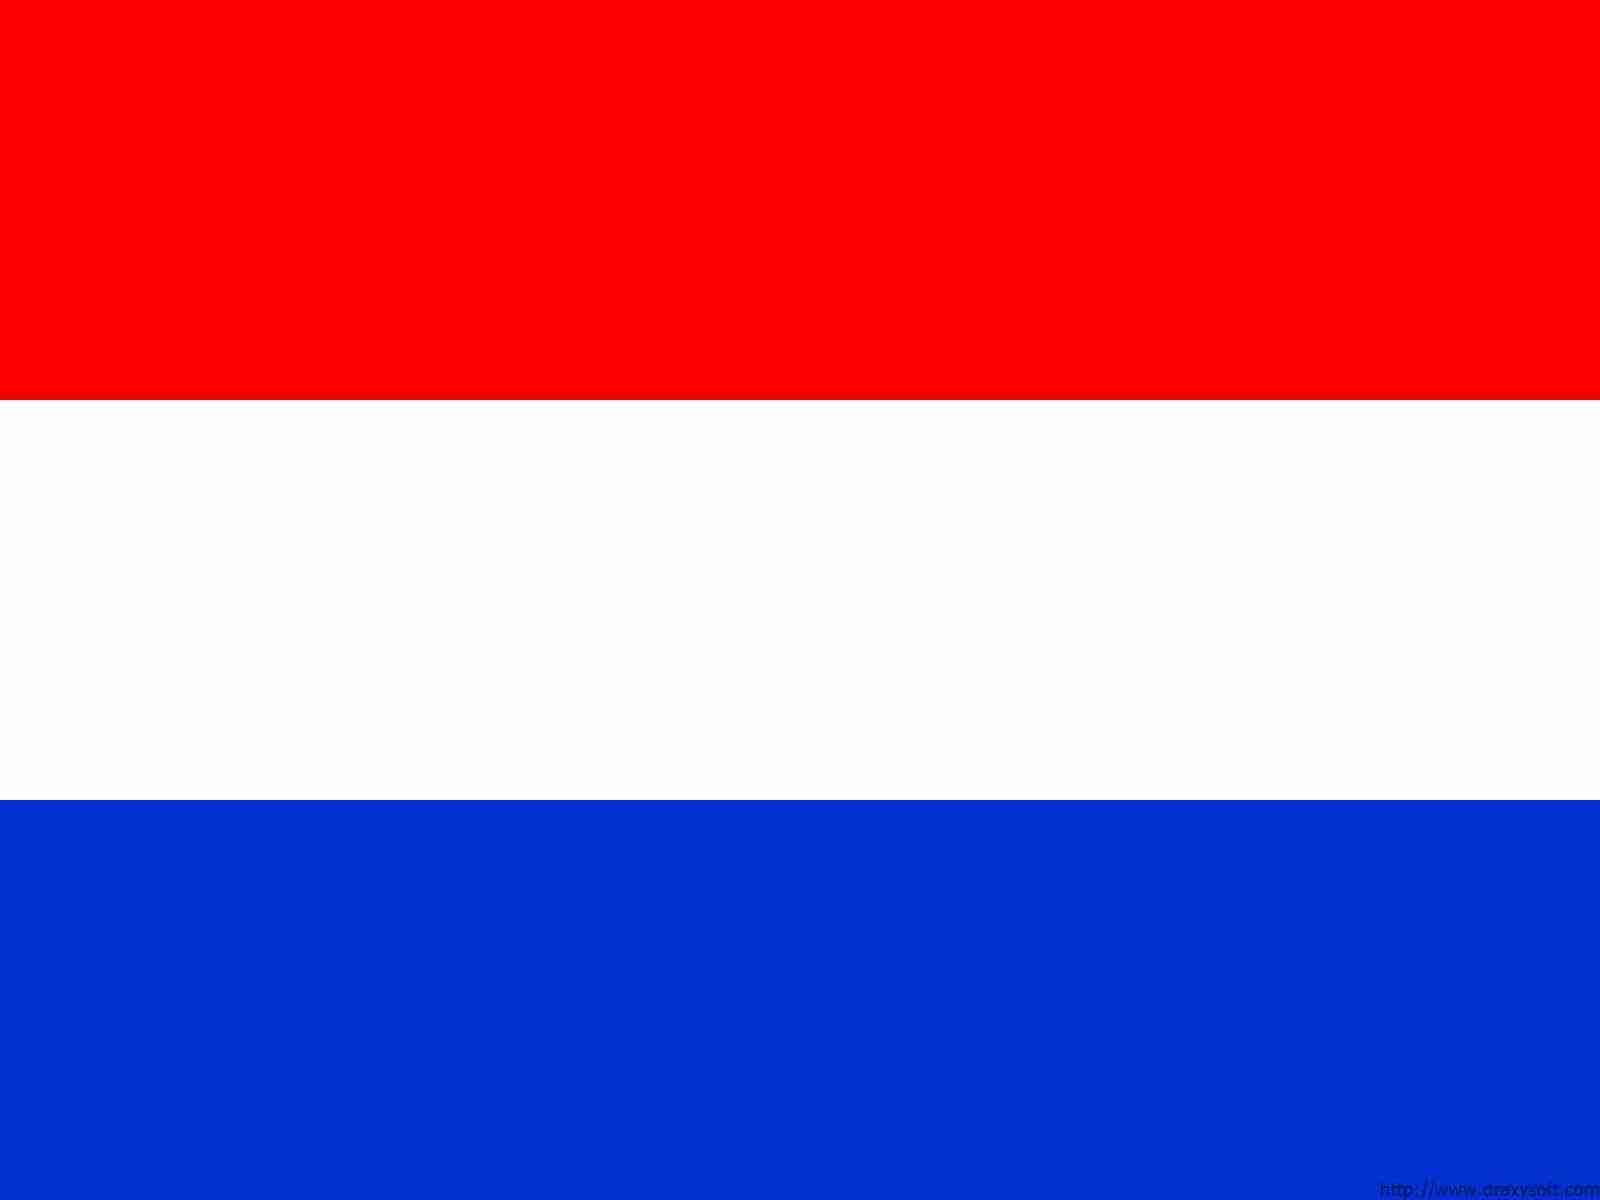 Netherland Colors 28 Images Graafix Wallpapers Flag Of Netherlands Netherlands Flag 3 Hd